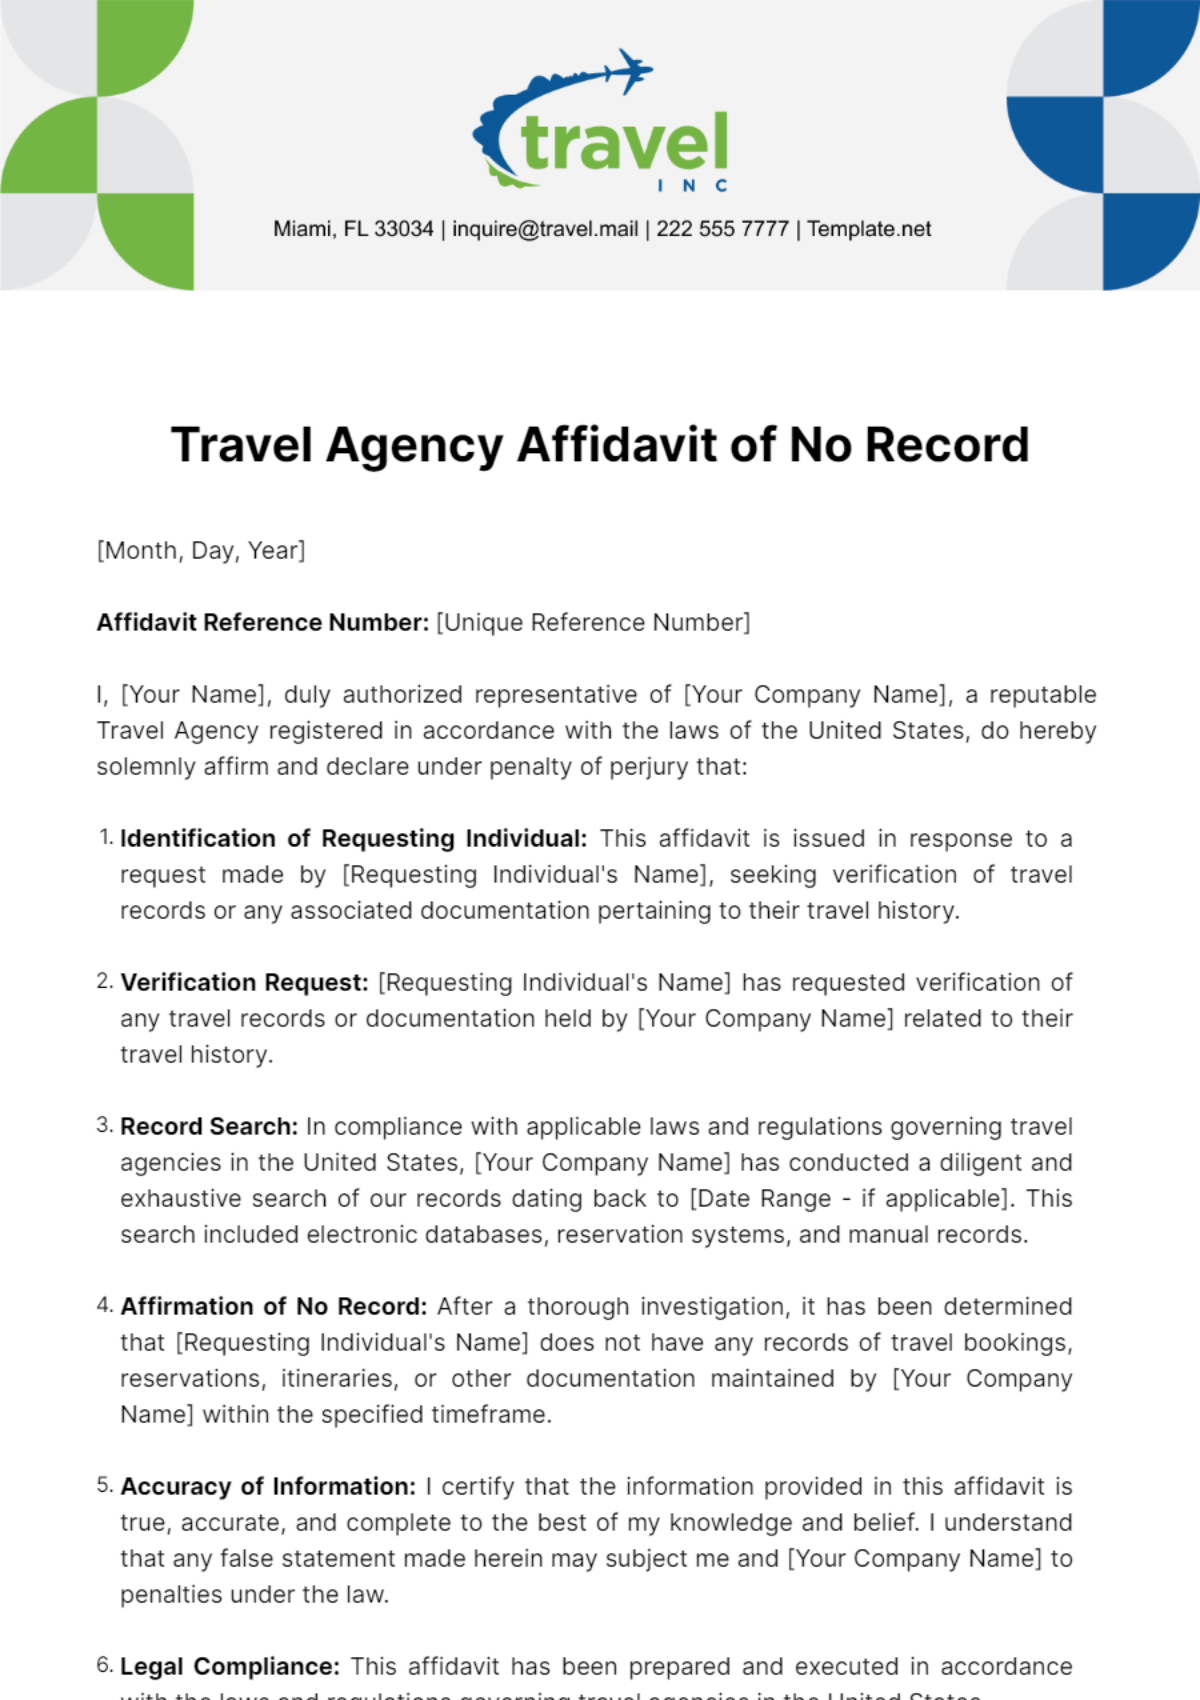 Free Travel Agency Affidavit of No Record Template